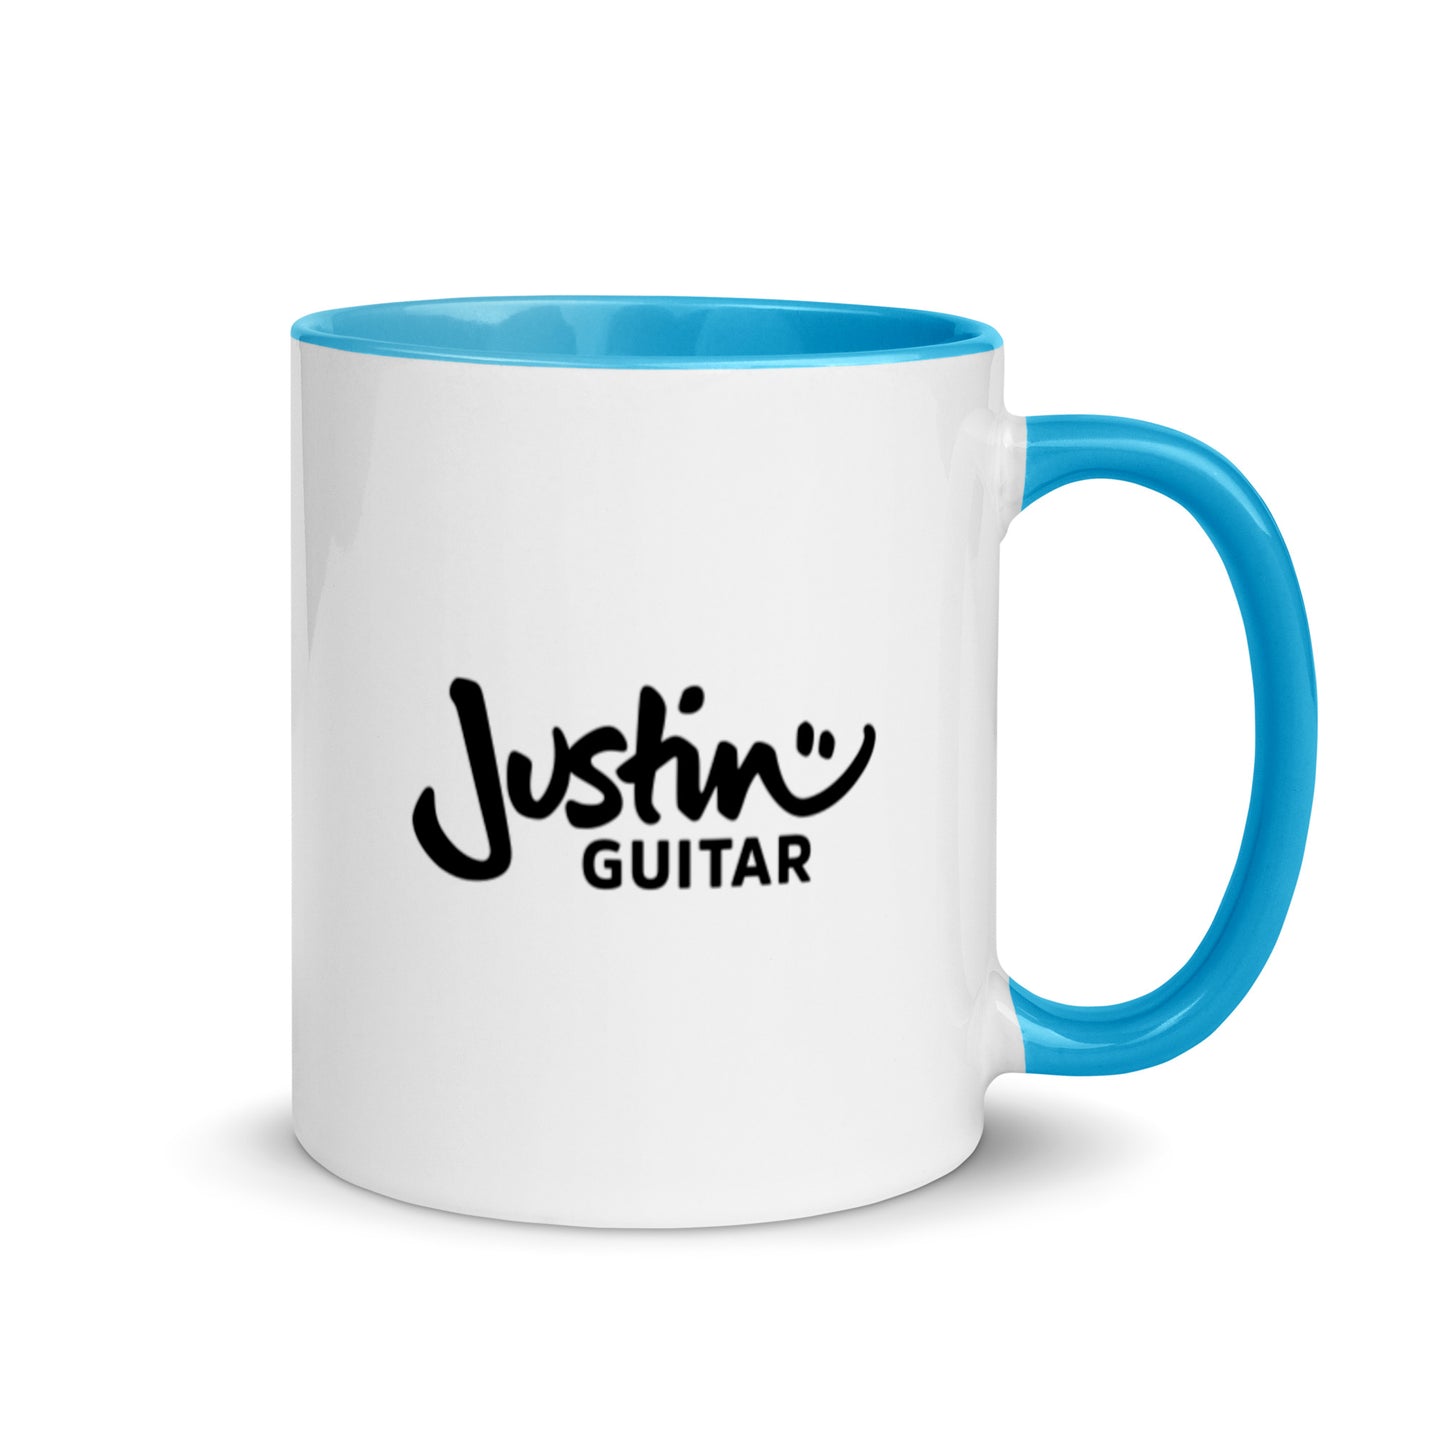 Party Guitarist Definition Mug